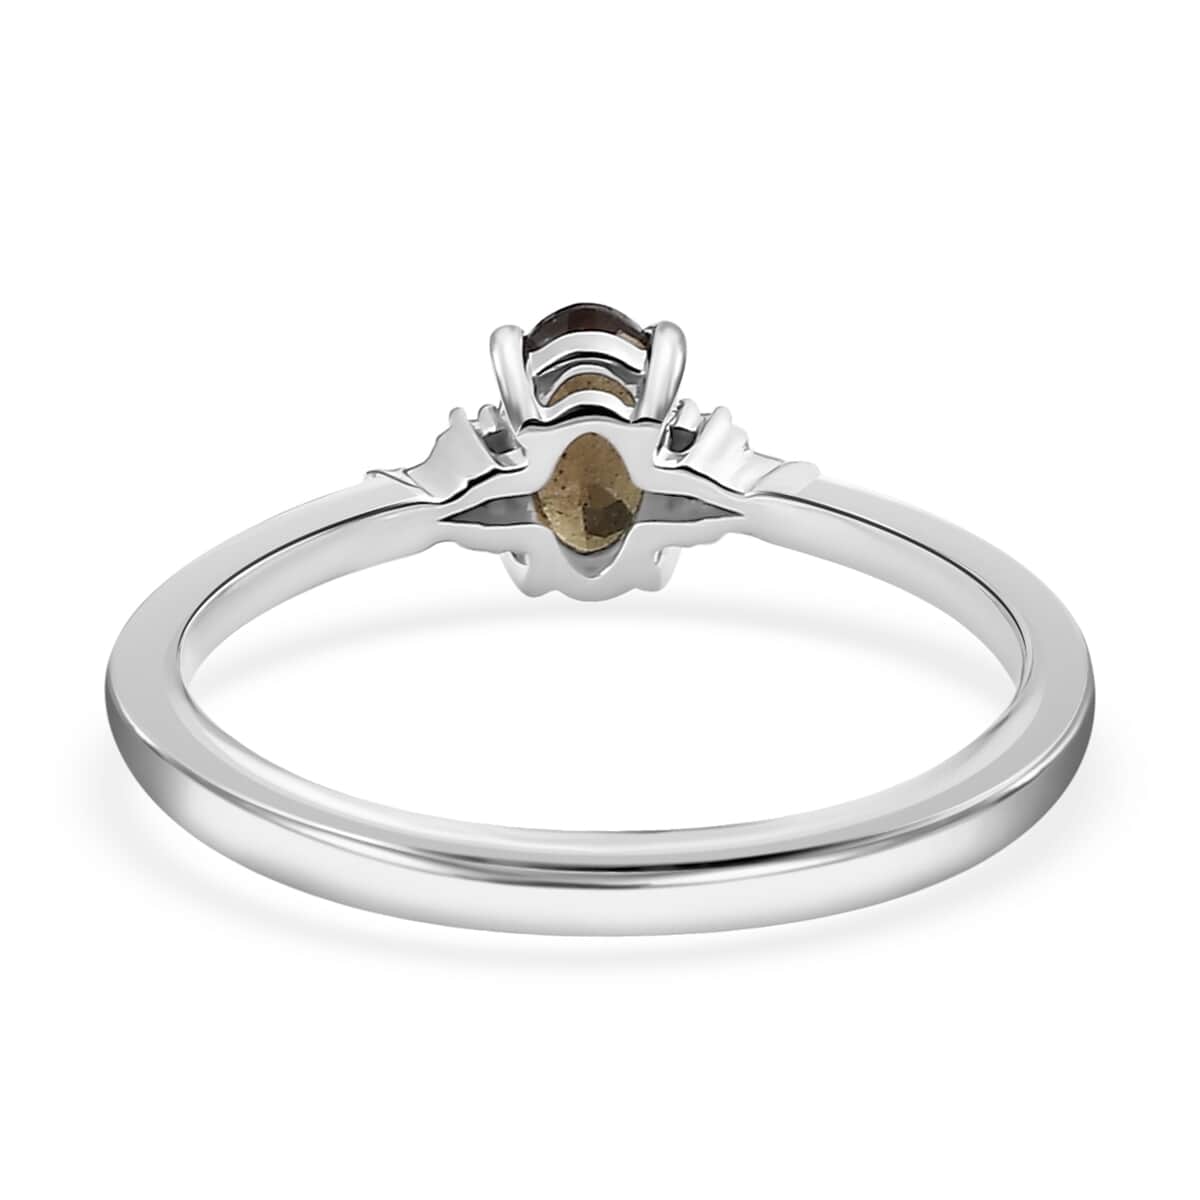 uxoro-10k-white-gold-premium-bekily-color-change-garnet-and-diamond-ring-size-10.0-0.65-ctw image number 4